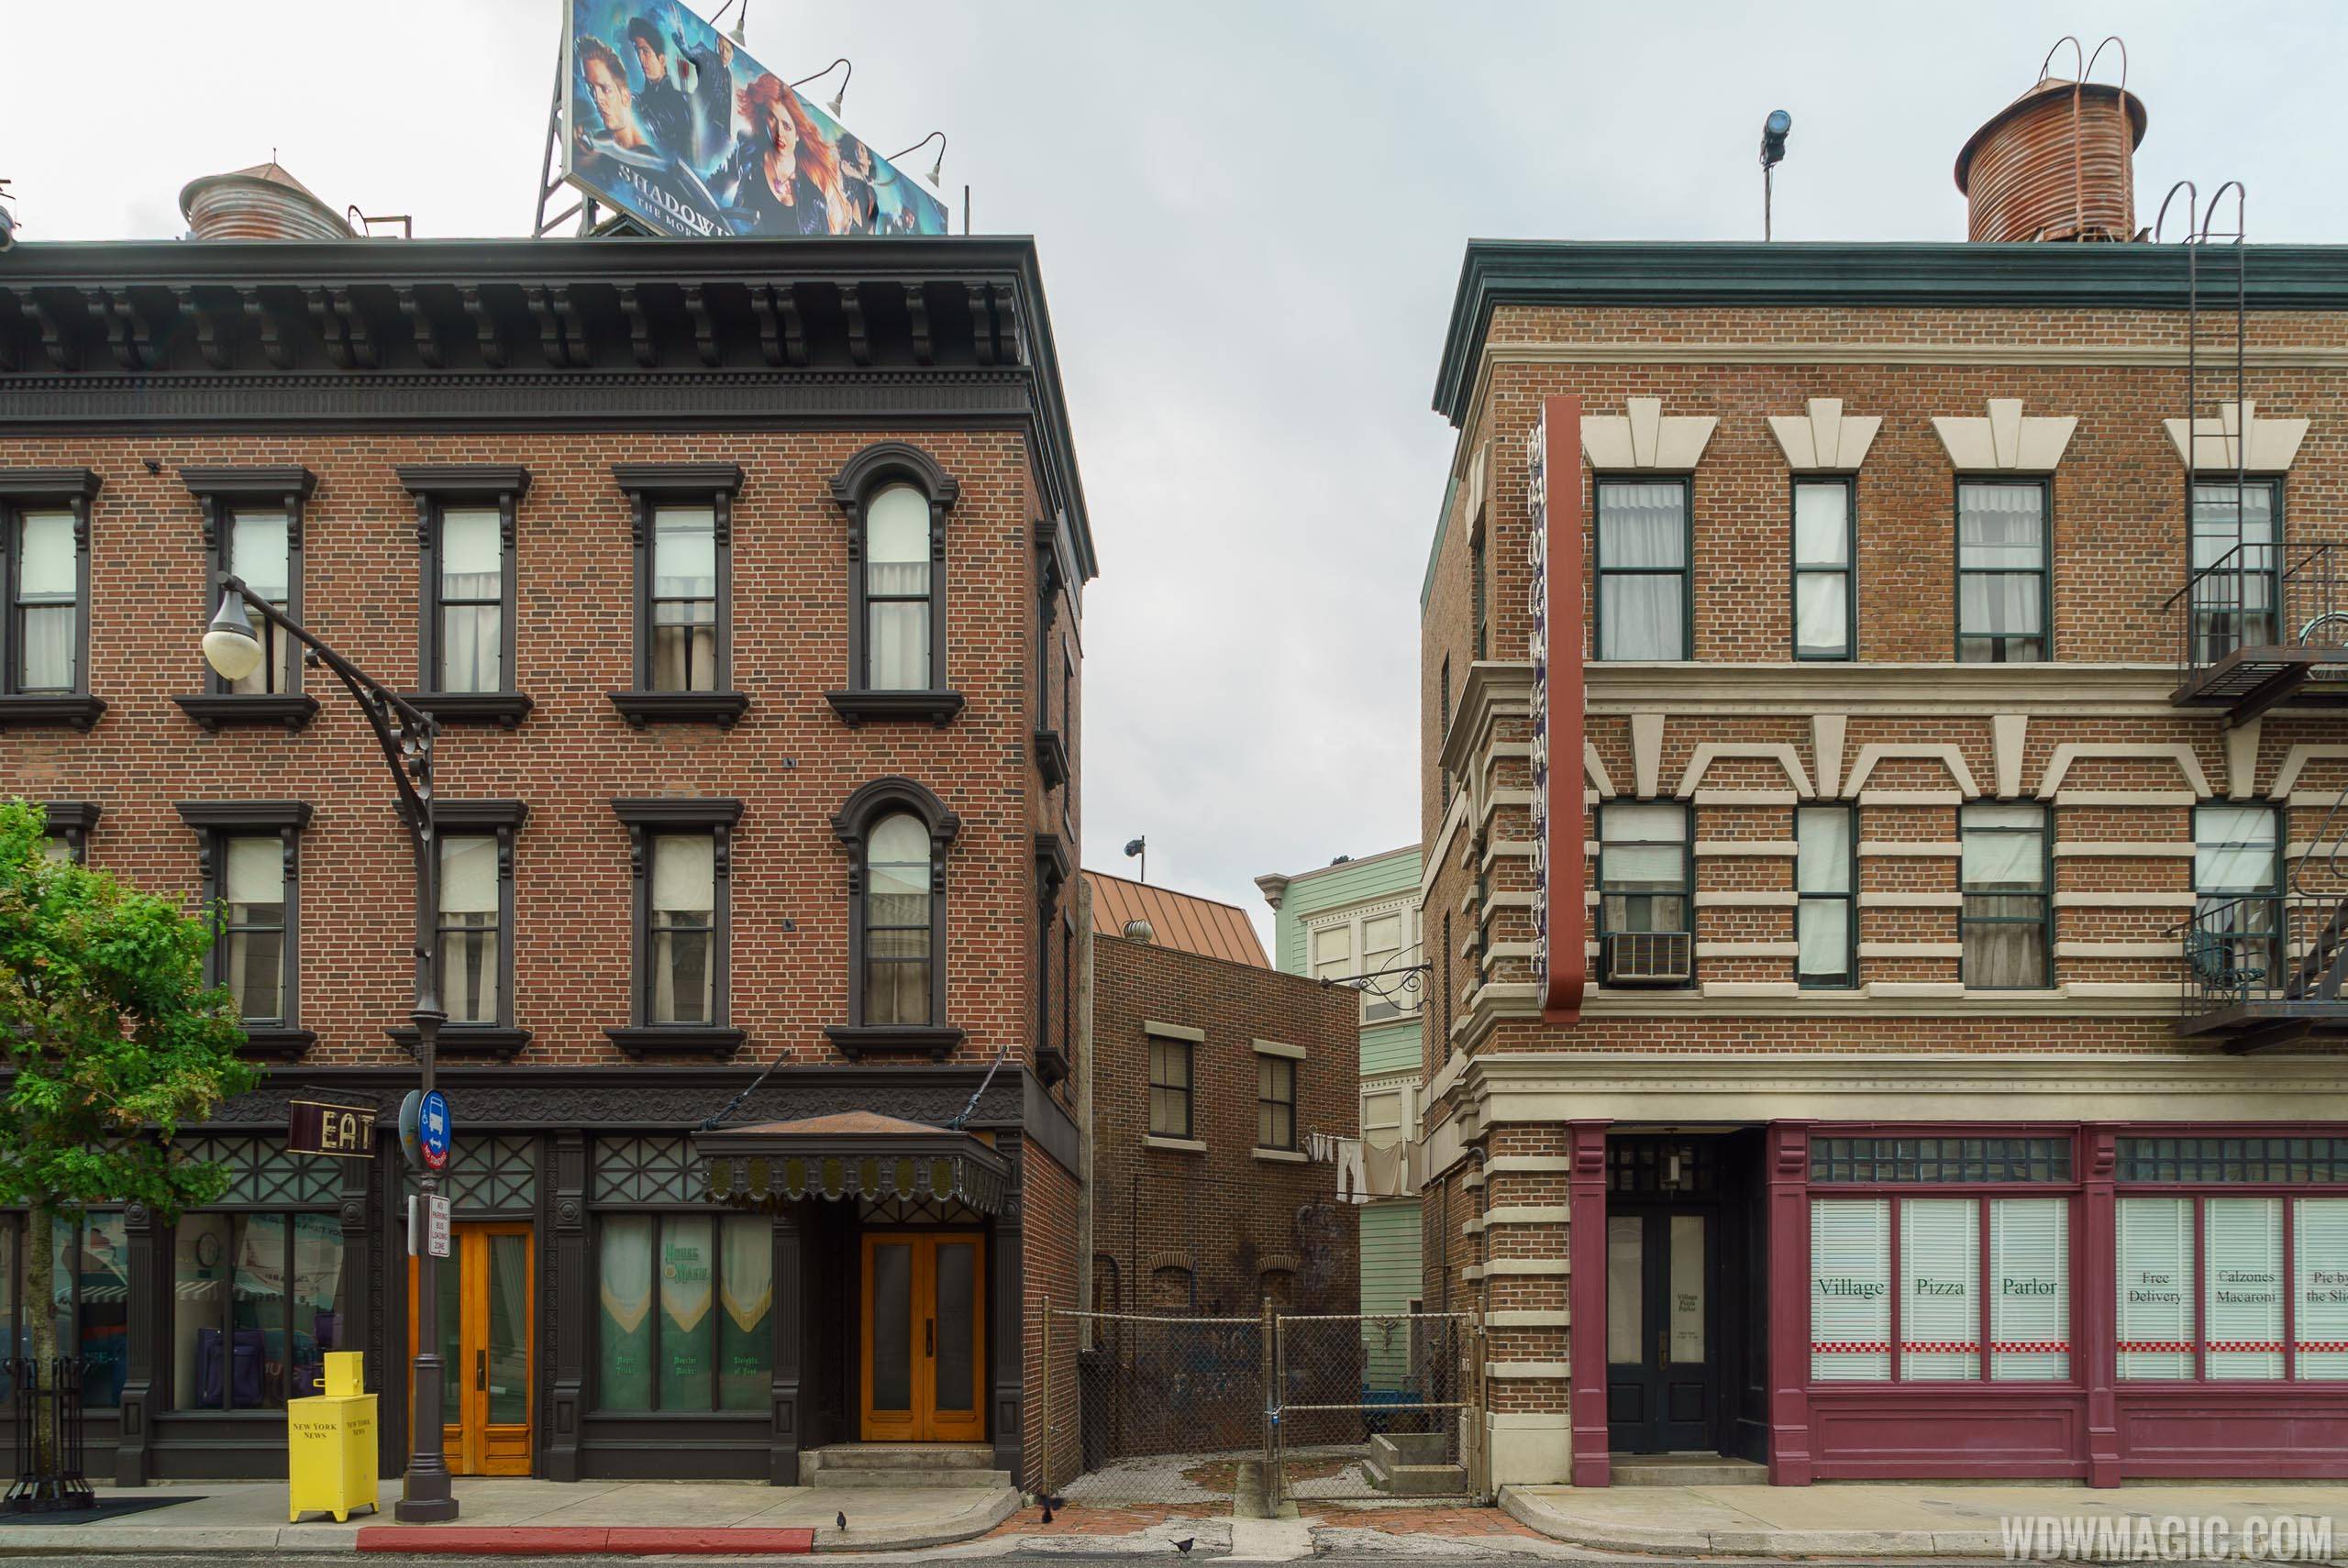 Streets of America facades - New York Street restaurant